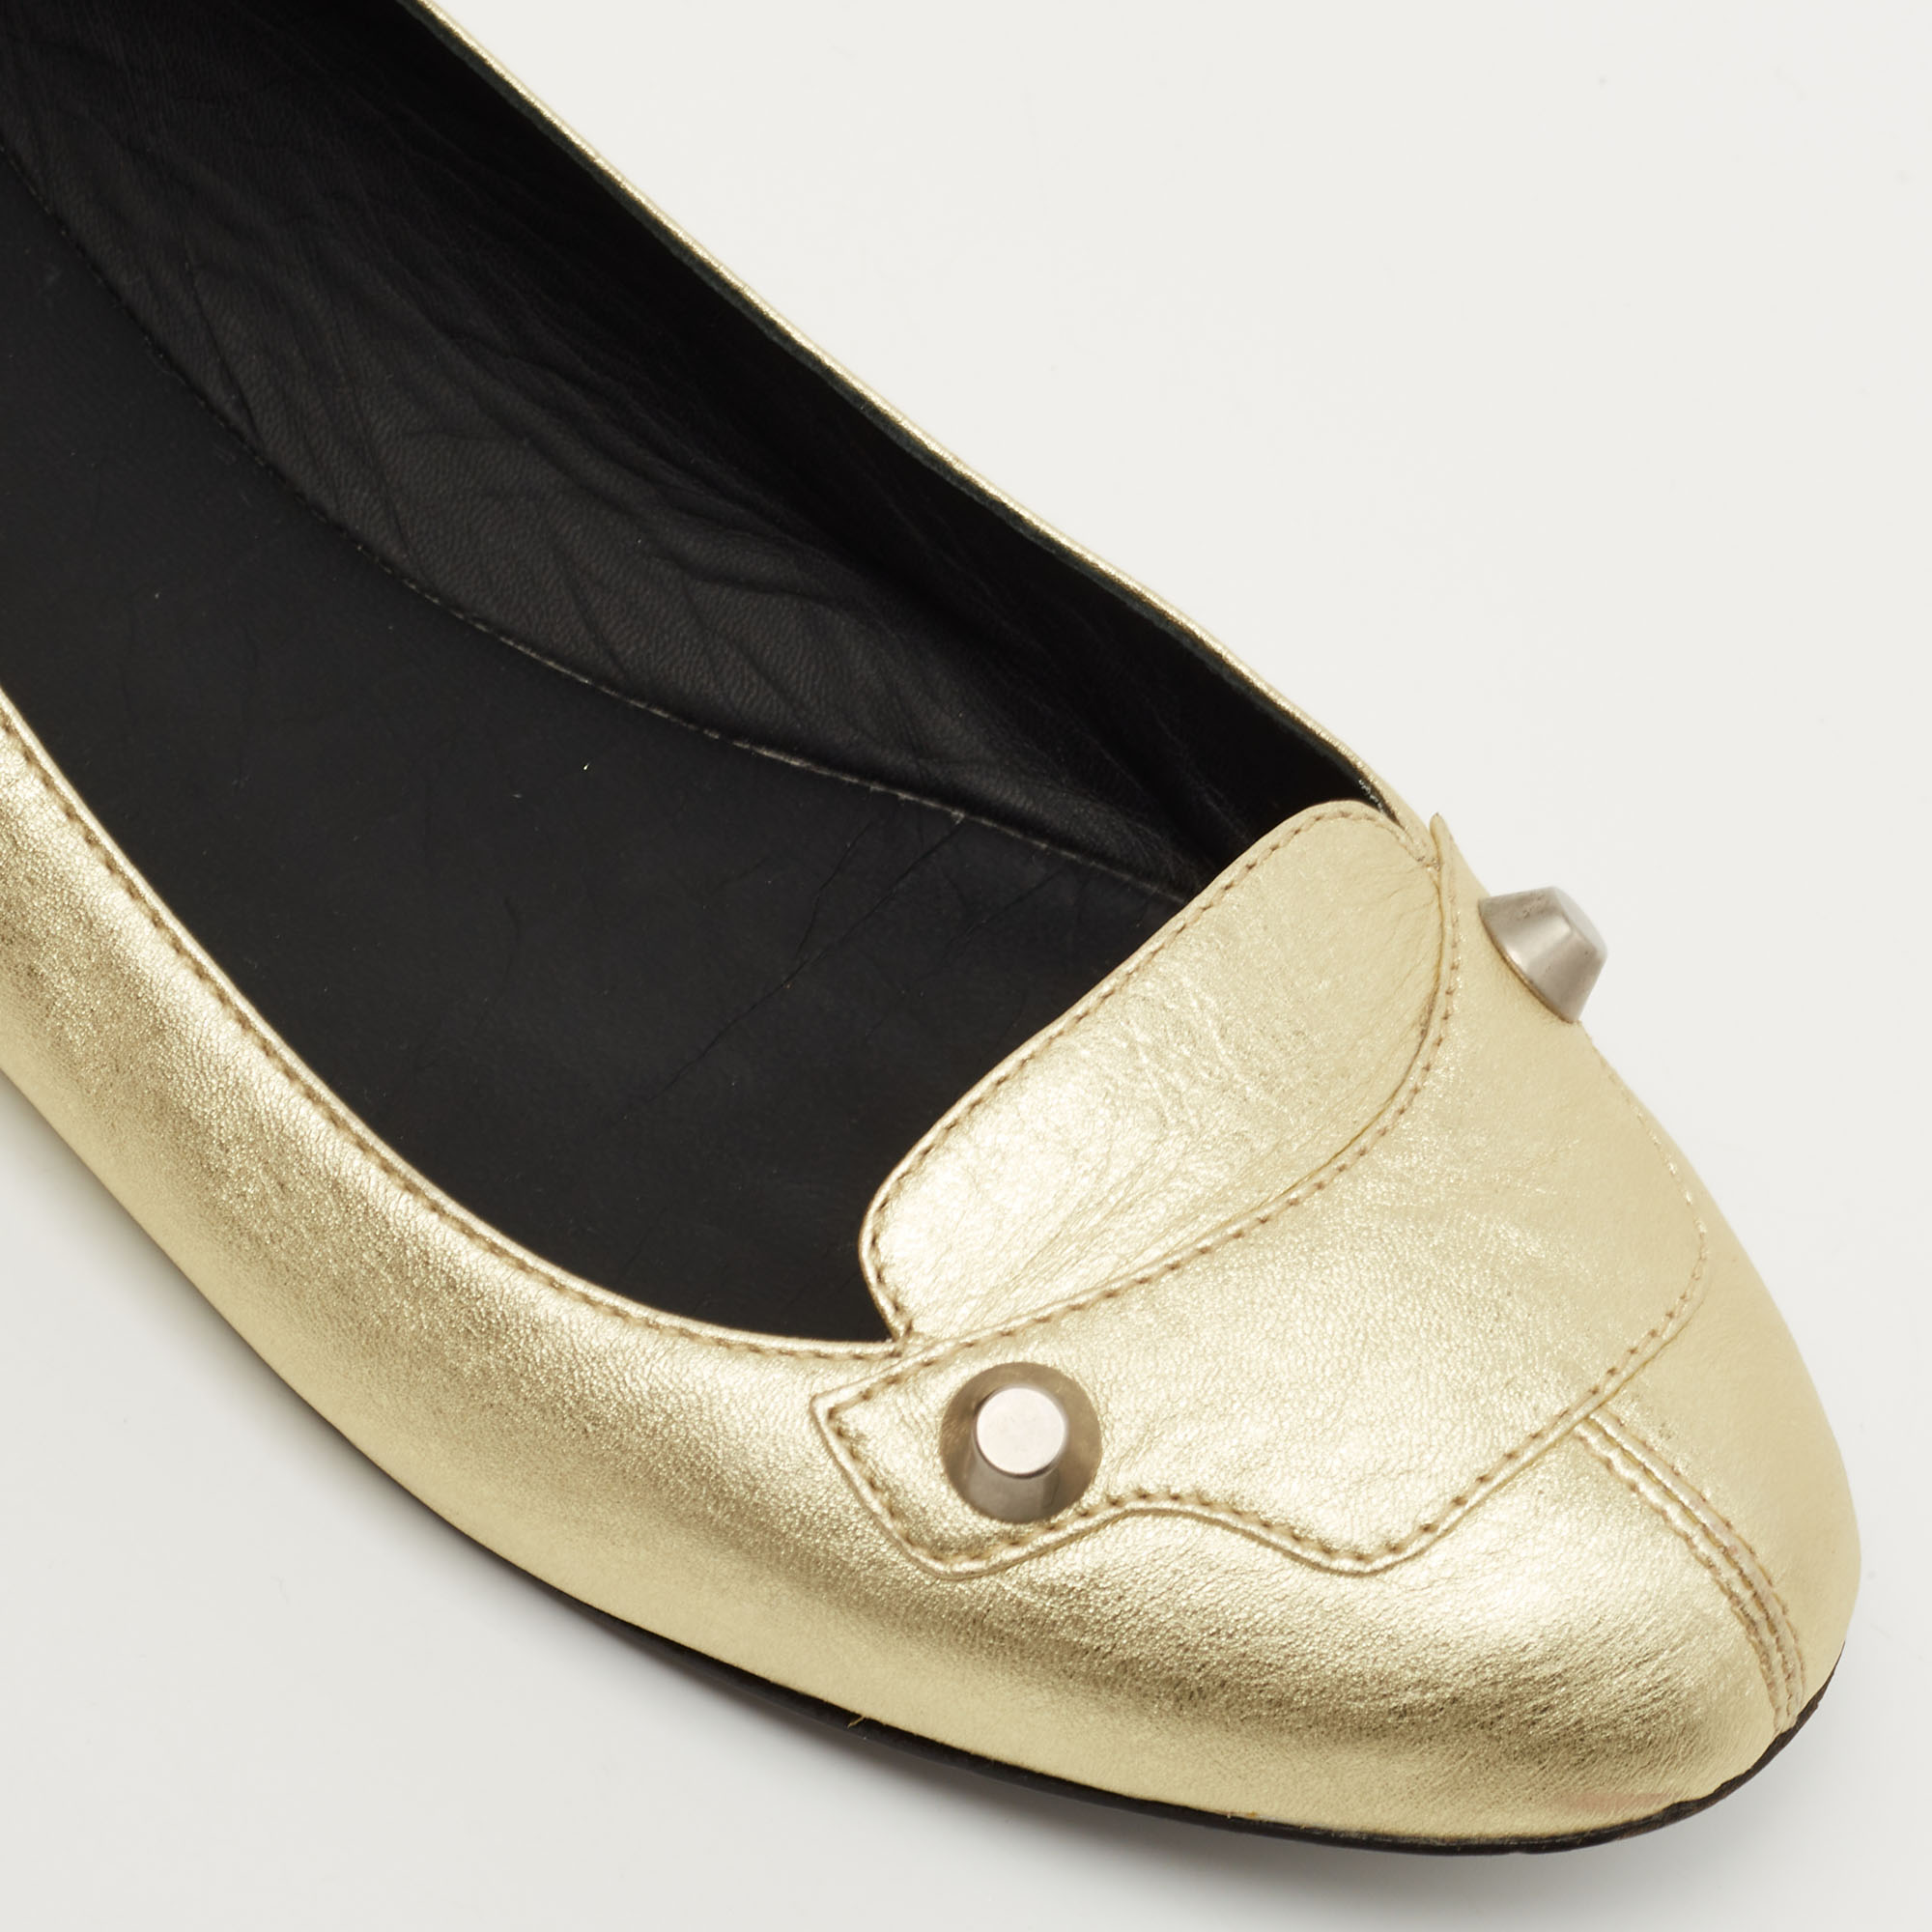 Balenciaga Gold Leather Studded Ballet Flats Size 38